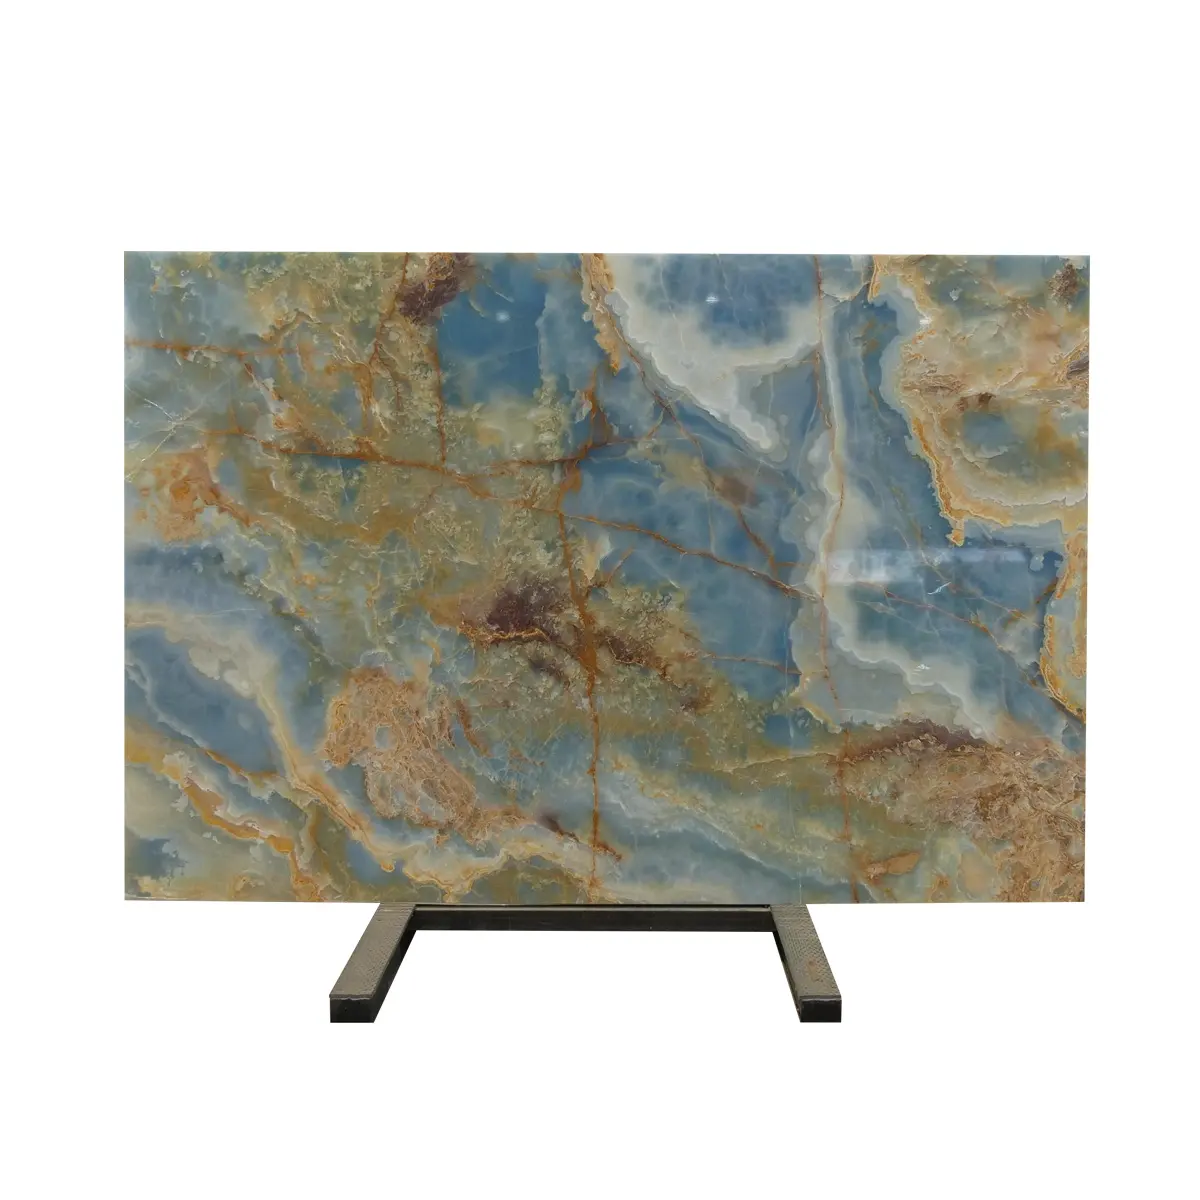 Artificial stone slab granite slab engineering table panel Kitchen countertops Bathroom countertops Stair board sill board Floor